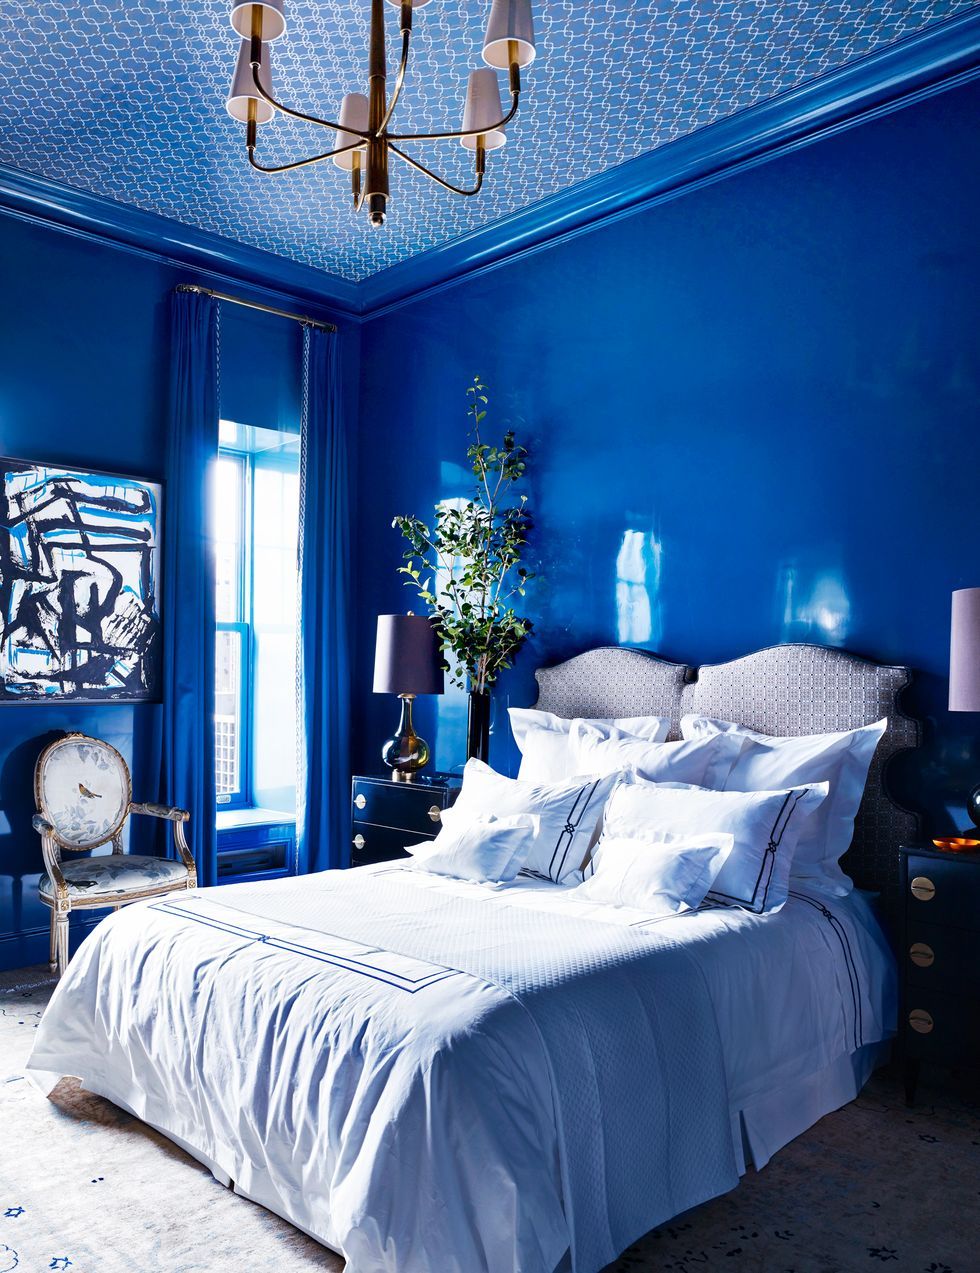 Royal blue and powder blue decor